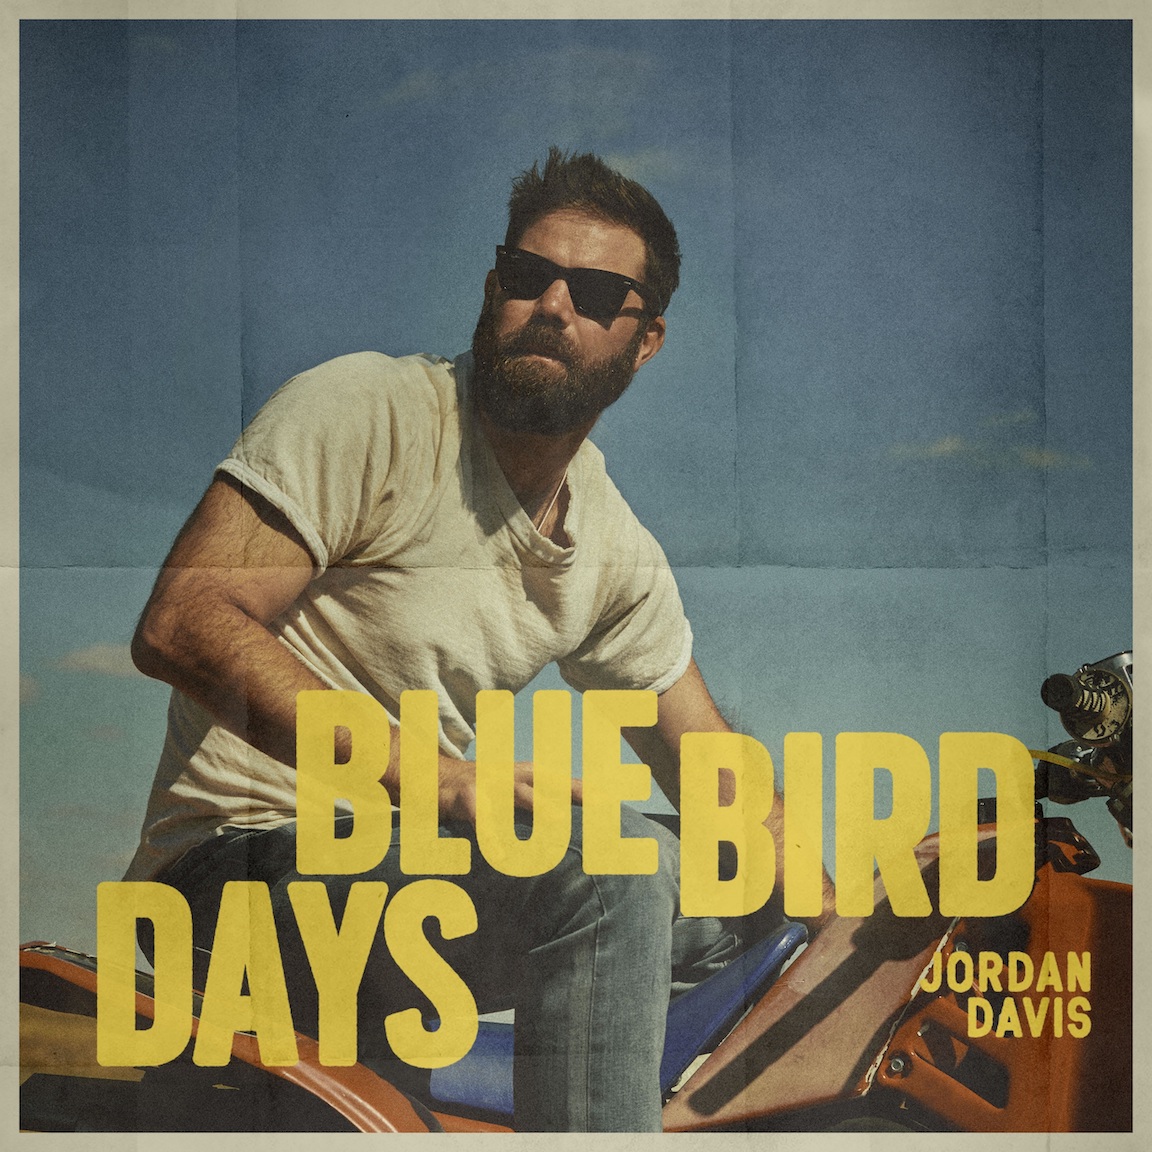 CMA Song of the Year winner Jordan Davis announces new album 'Bluebird